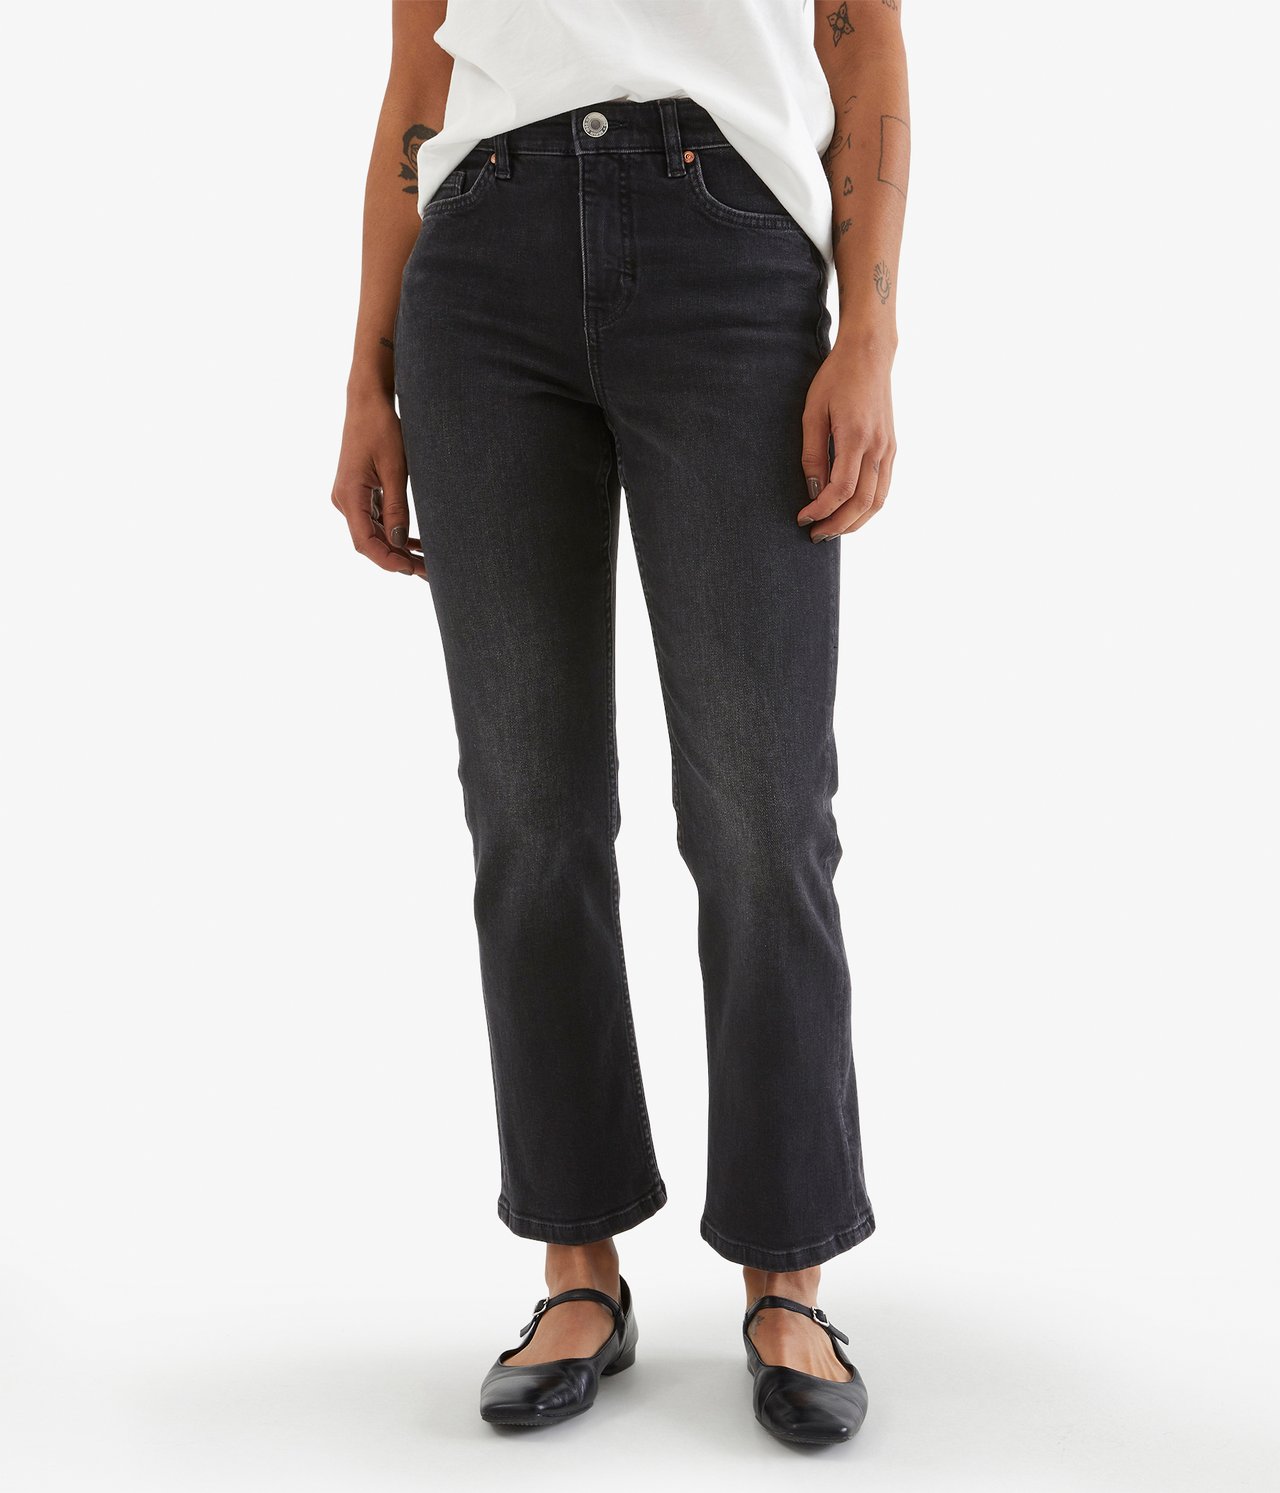 Cropped flare jeans regular waist - Pesty musta denimi - 2